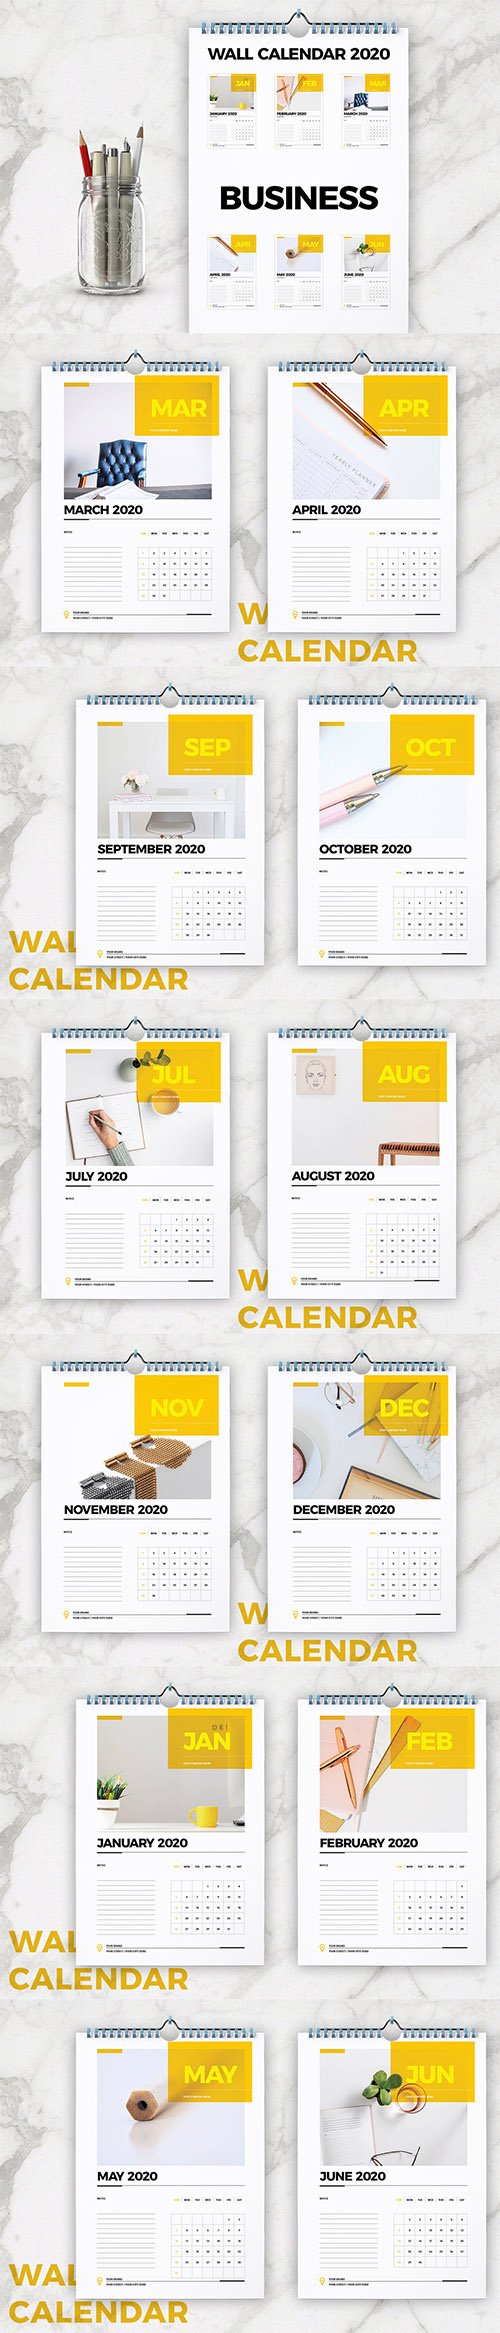 Wall Calendar 2020 Layout 5 INDD